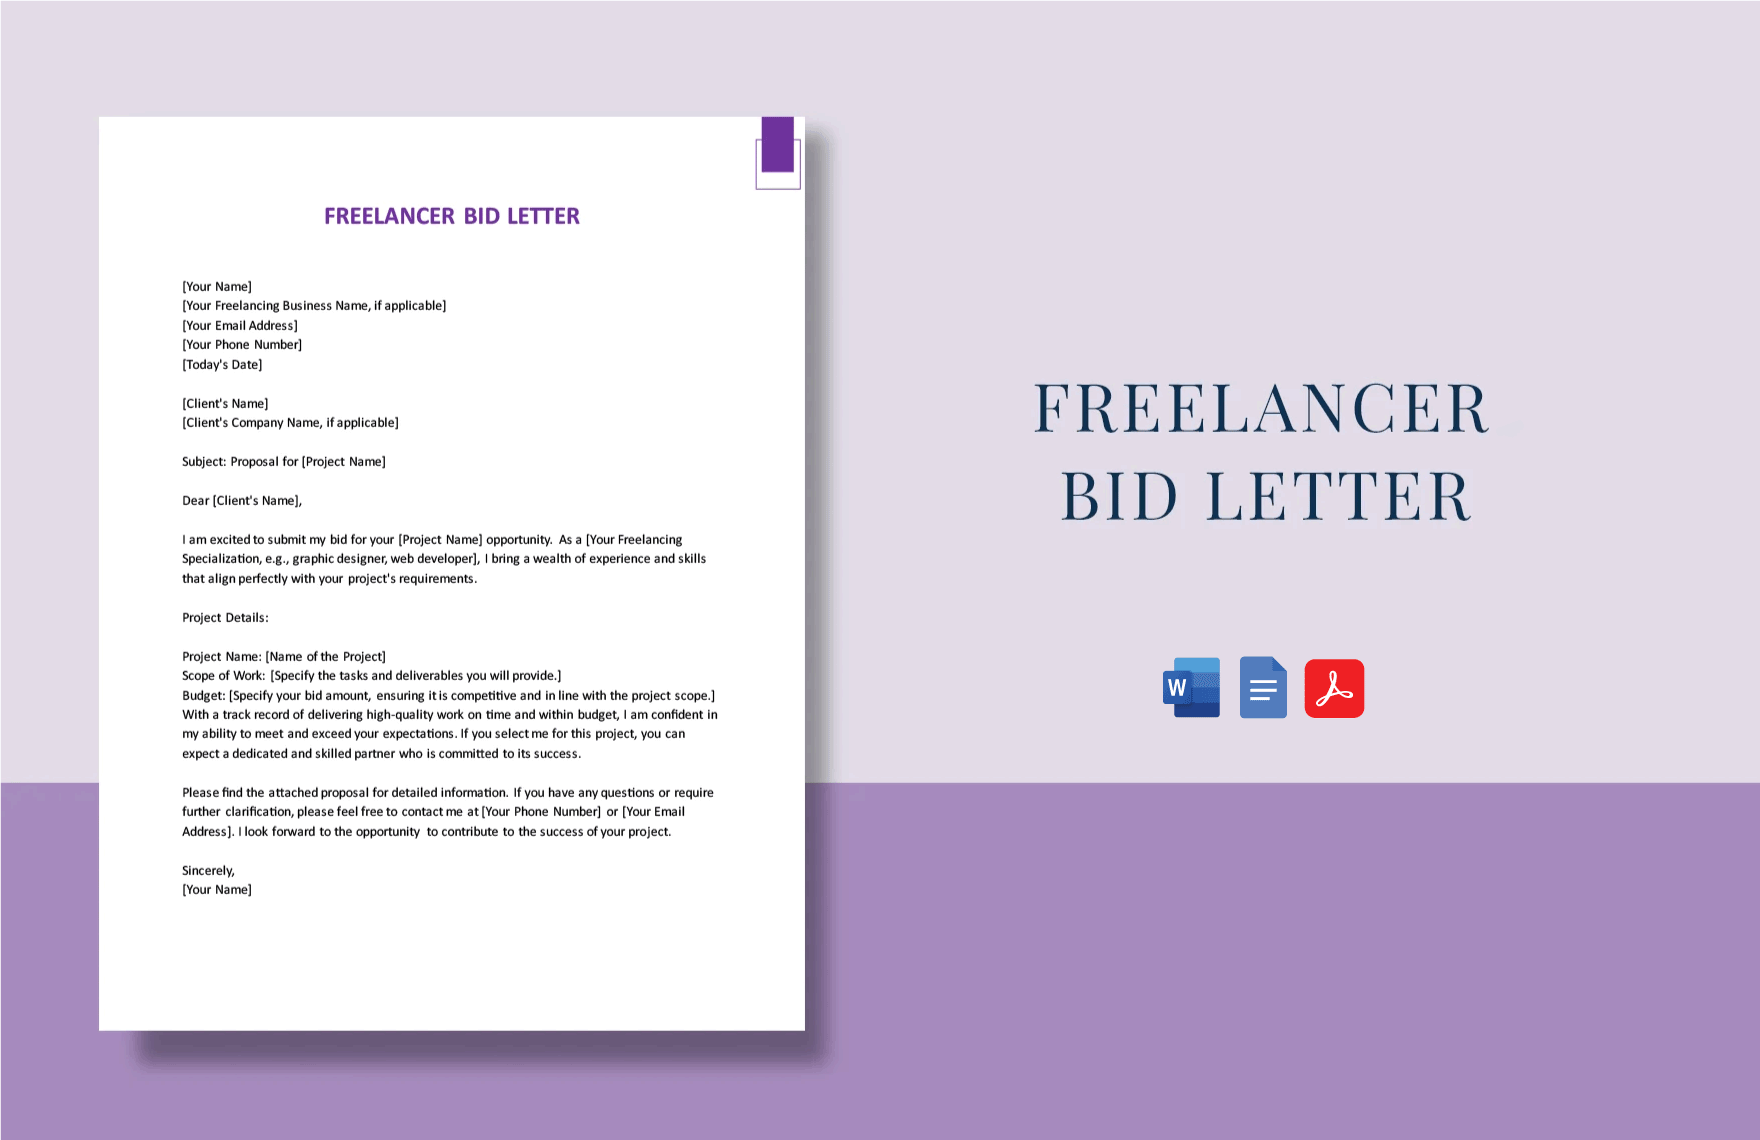 Freelancer Bid Letter in Word, Google Docs, PDF